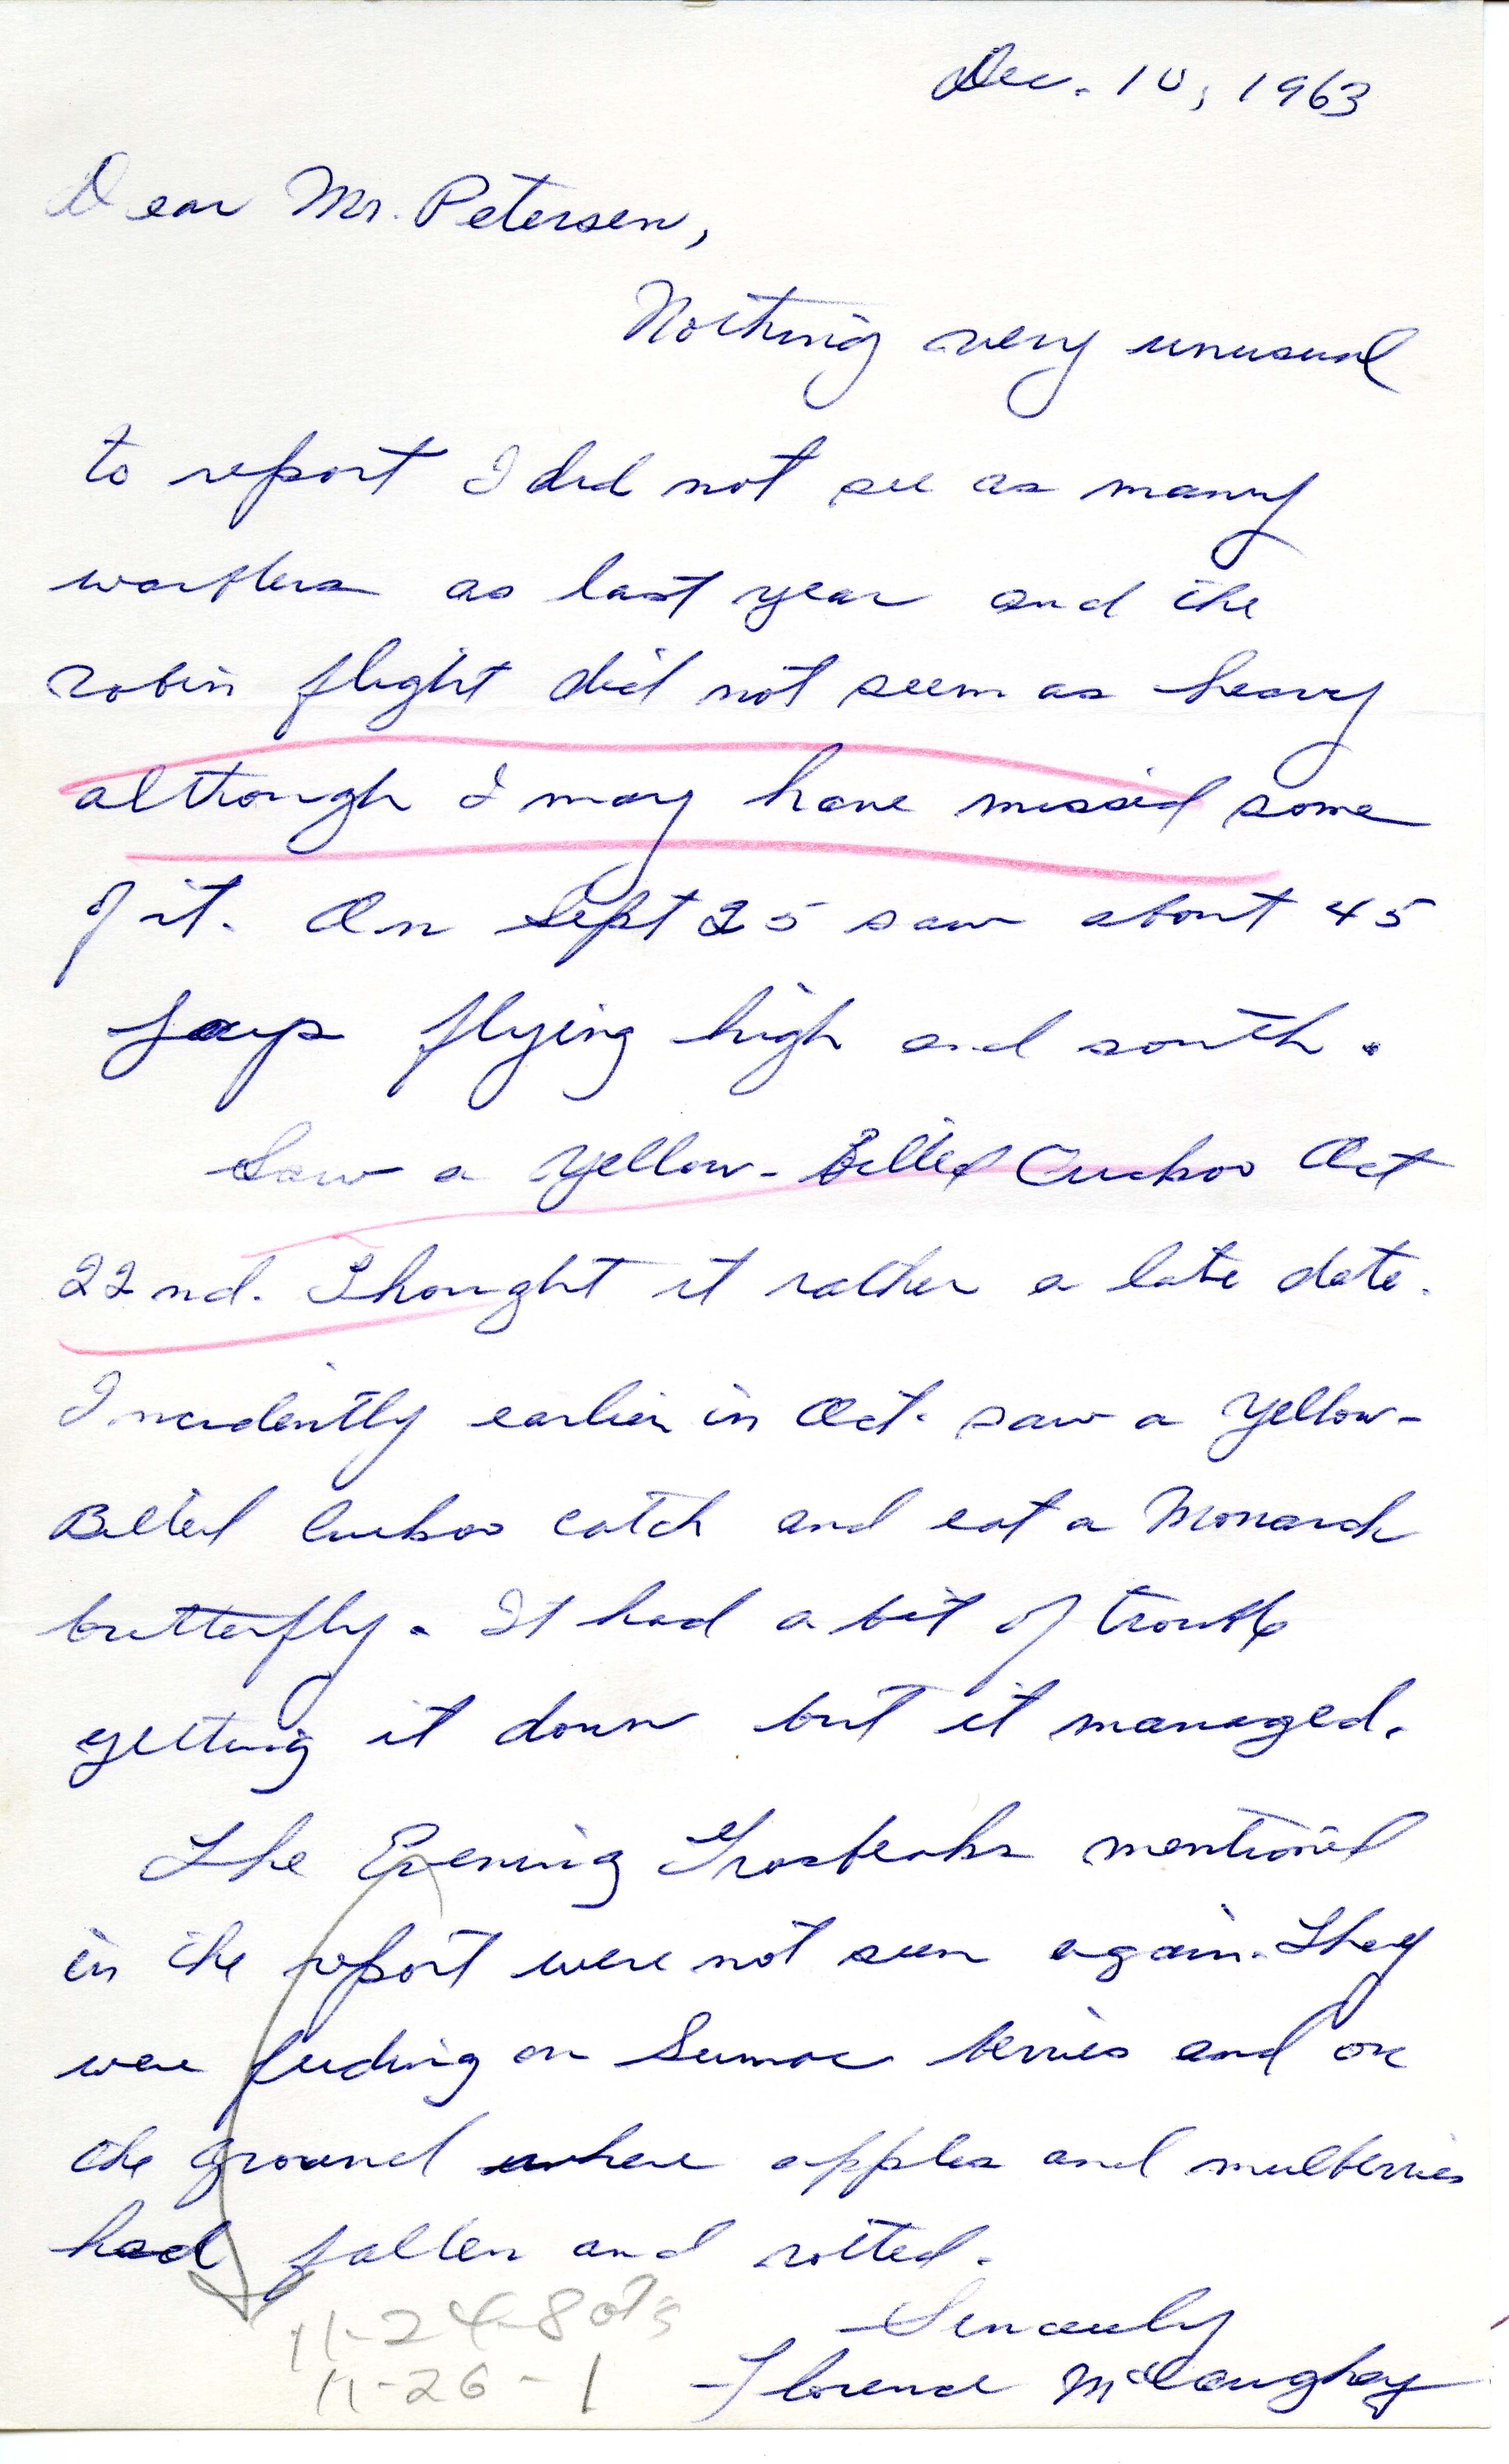 Florence McCaughey letter to Peter C. Petersen regarding field notes, December 10, 1963